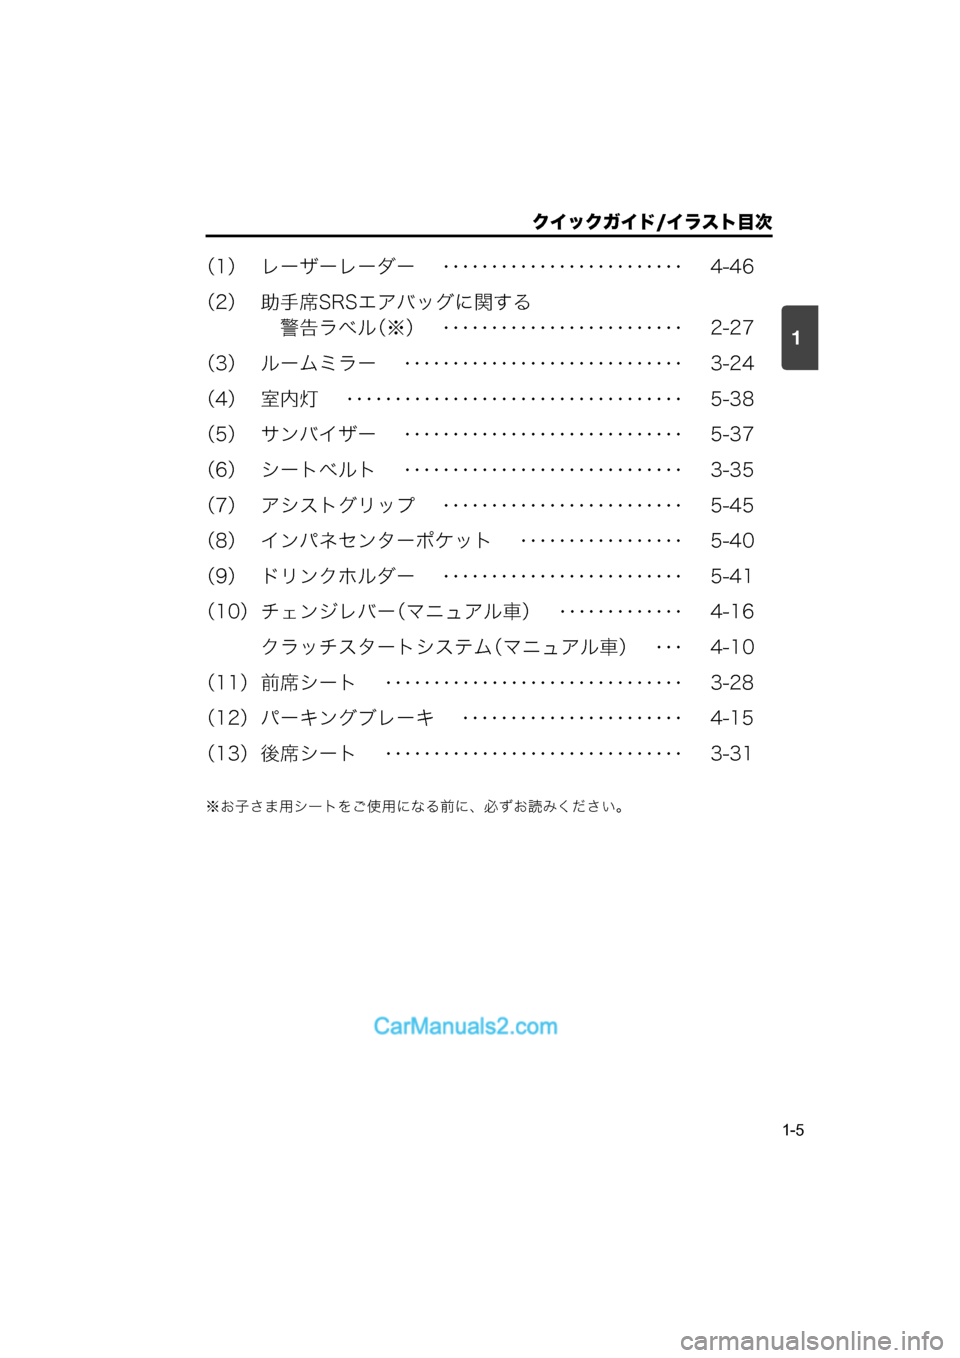 MAZDA MODEL CARROL 2015  取扱説明書 (キャロル) (in Japanese) 1
クイックガイド/イラスト目次
1-5
（1） レーザーレーダー　 ･････････････････････････ 　4-46
（2） 助手席SRSエアバッ�